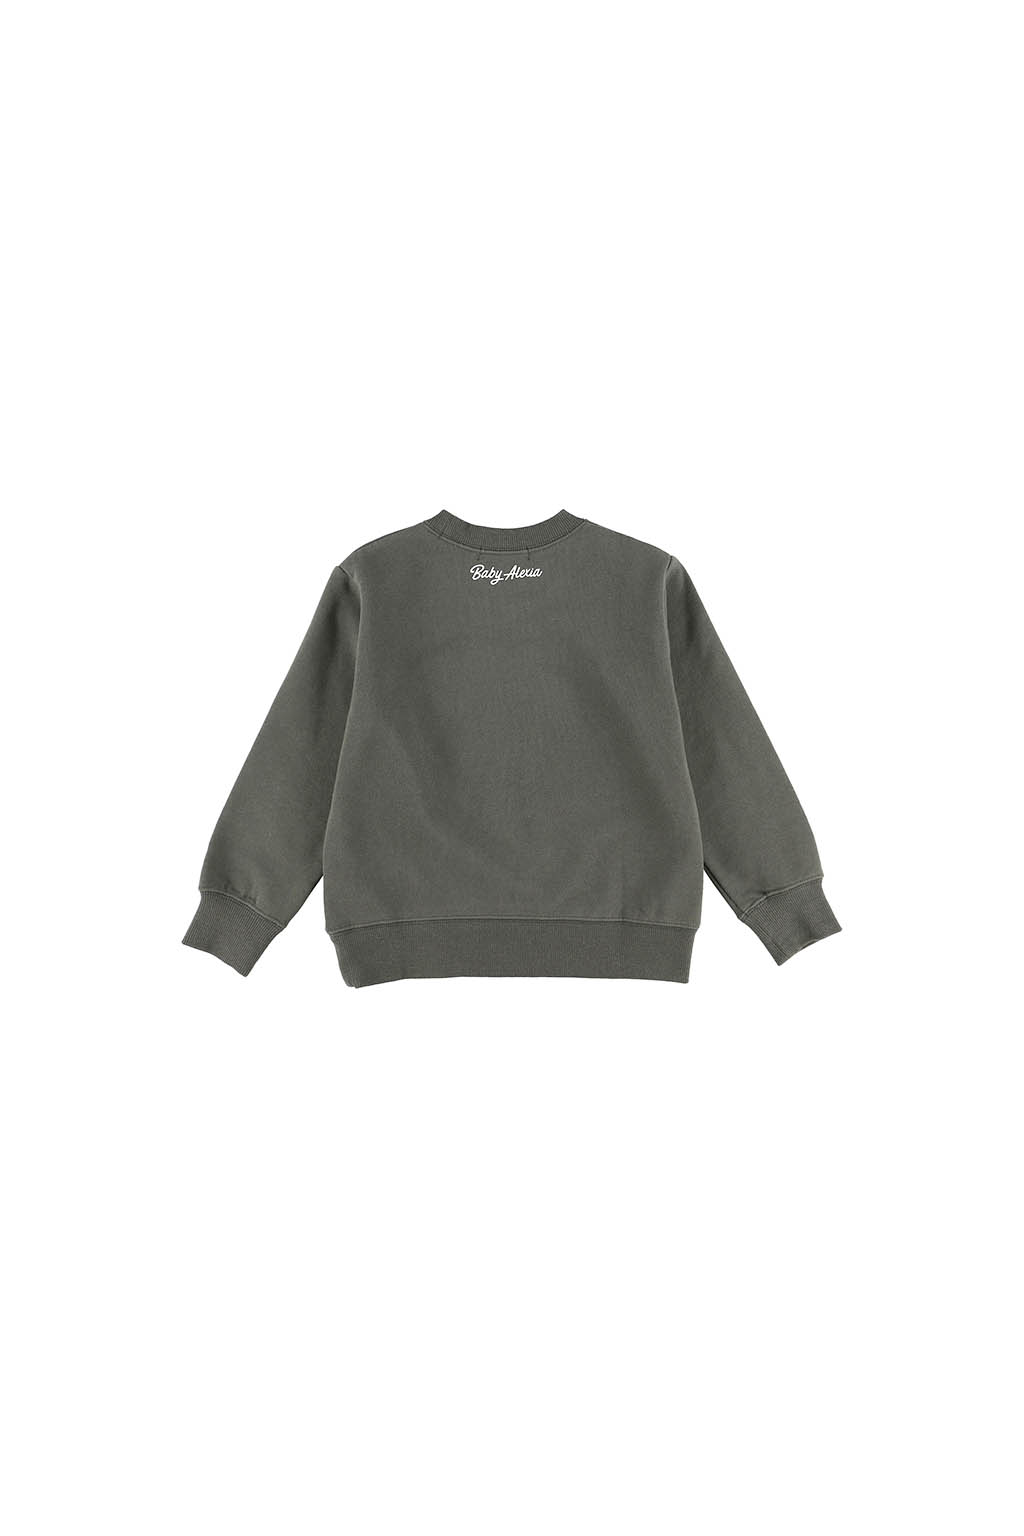 baby-alexia-palm-tree-sweatshirt-charcoal-06